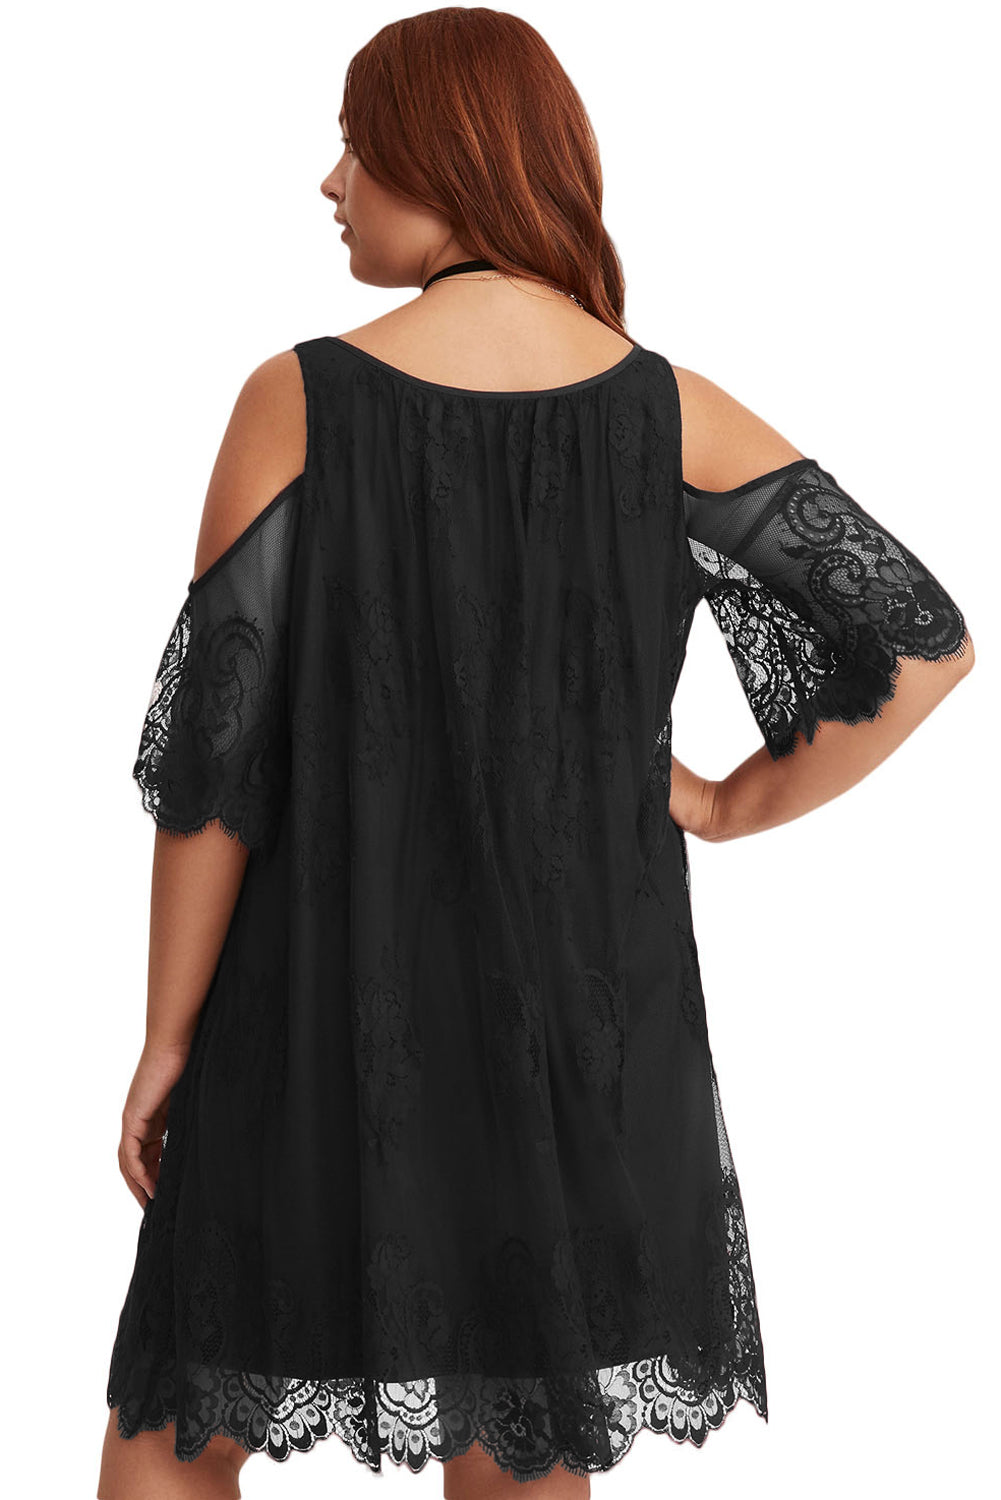 Lace Cold Shoulder Trapeze Dress (Burgundy, Black, White)